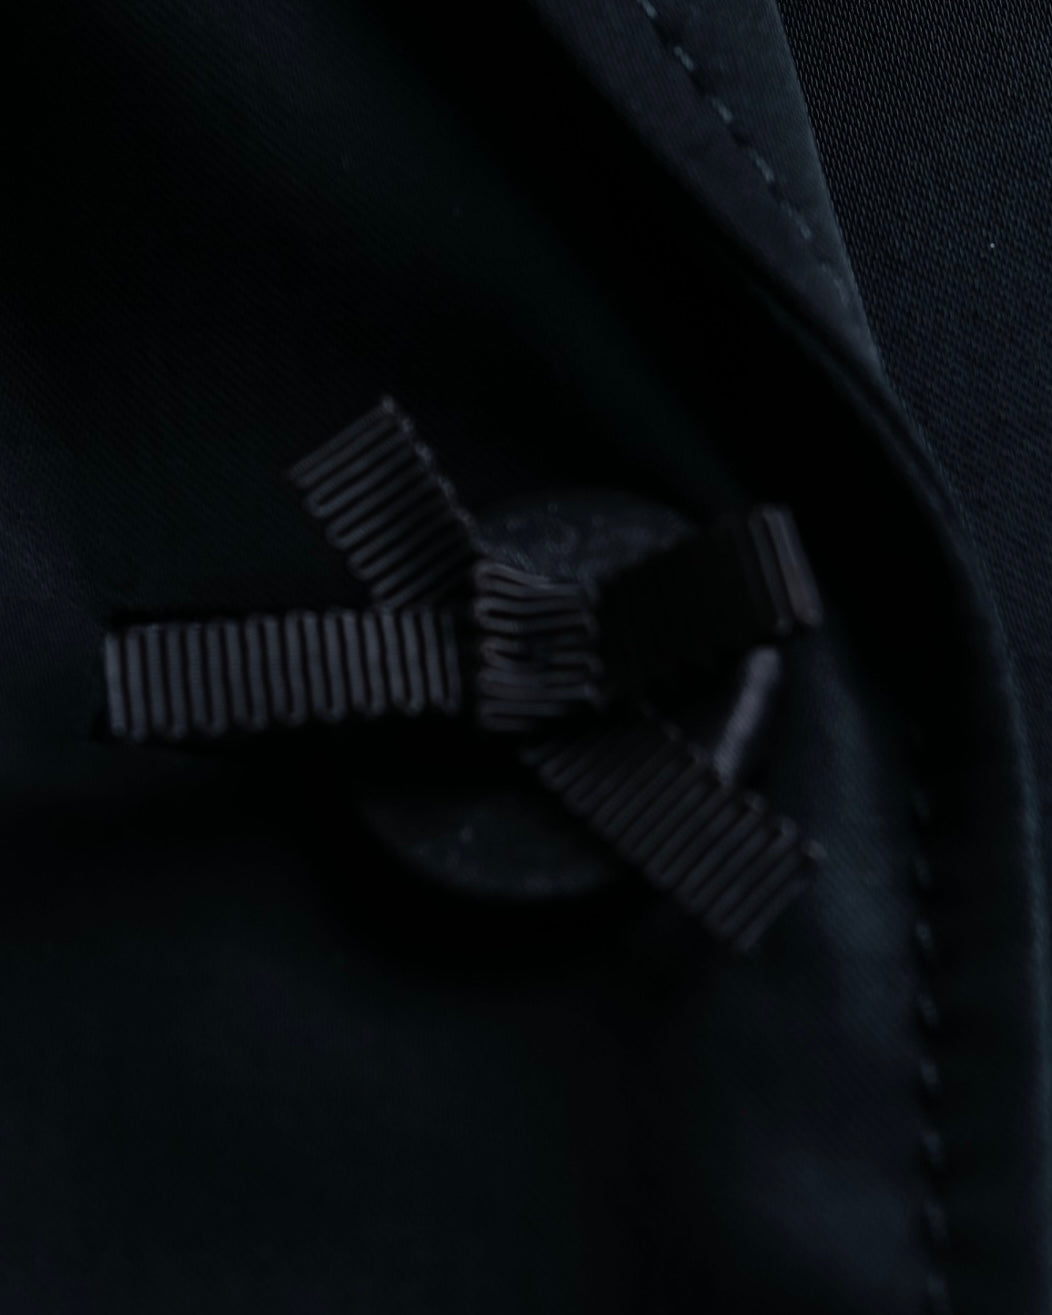 "LANVIN en Bleu" Tape-decorated tailored jacket